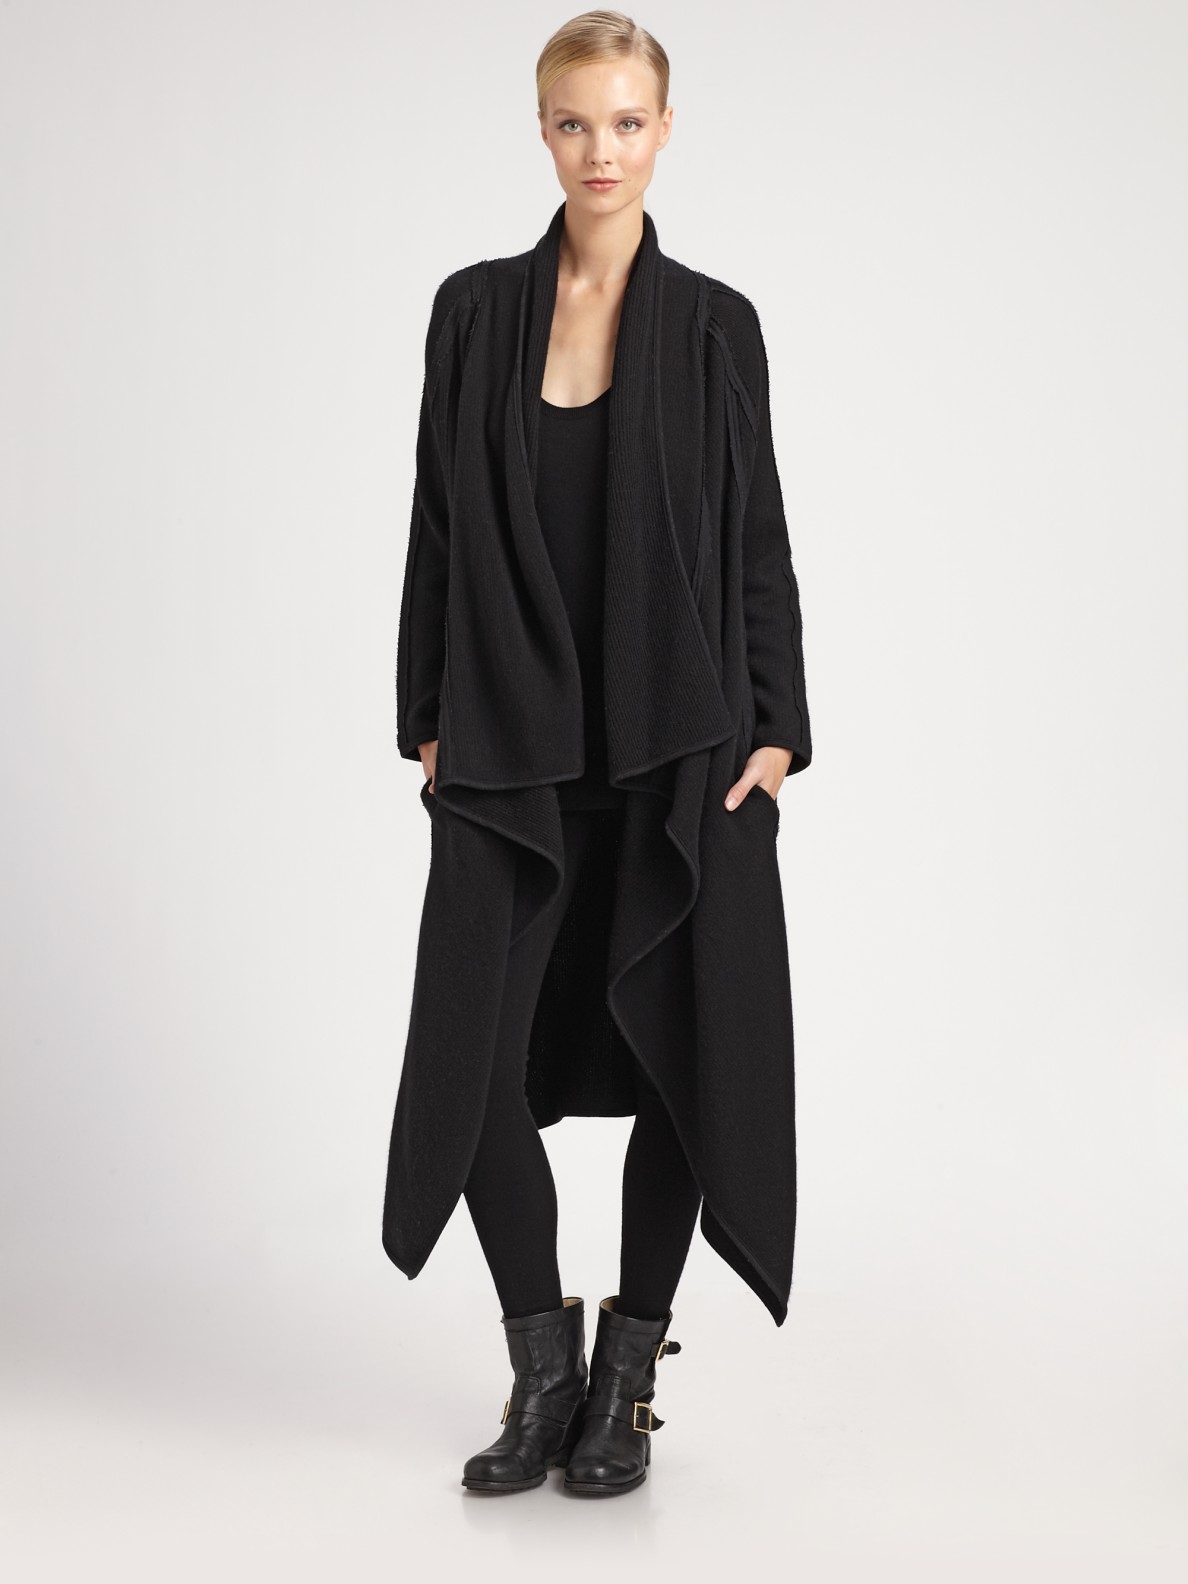 Lyst - Donna karan Boiled Cashmere Drop Coat in Black